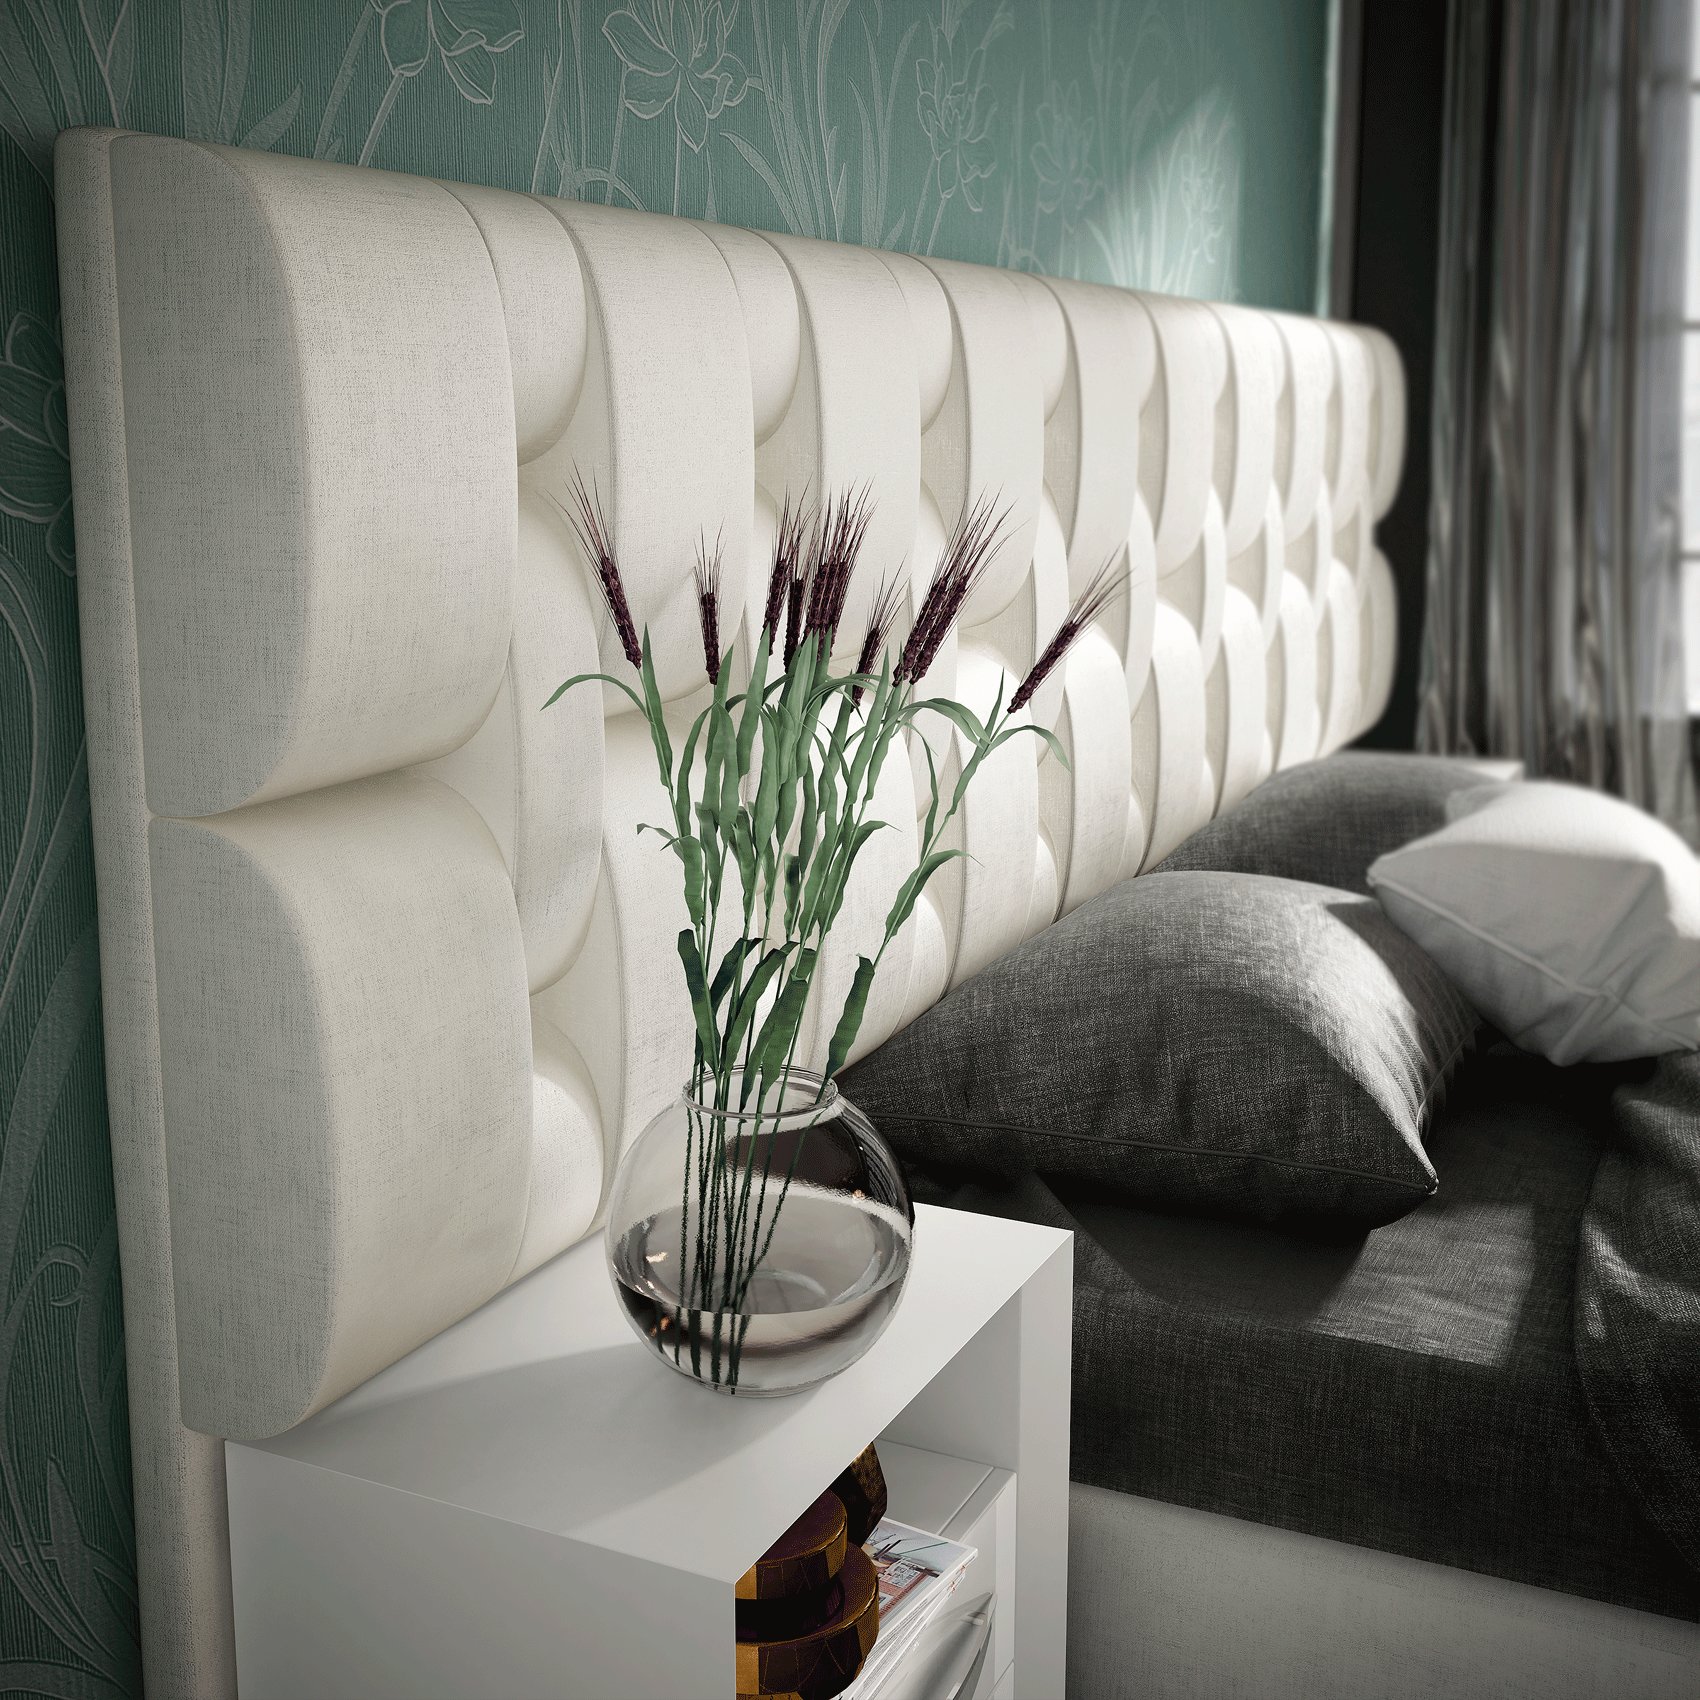 Elegant Wood Luxury Contemporary Furniture Set - Click Image to Close